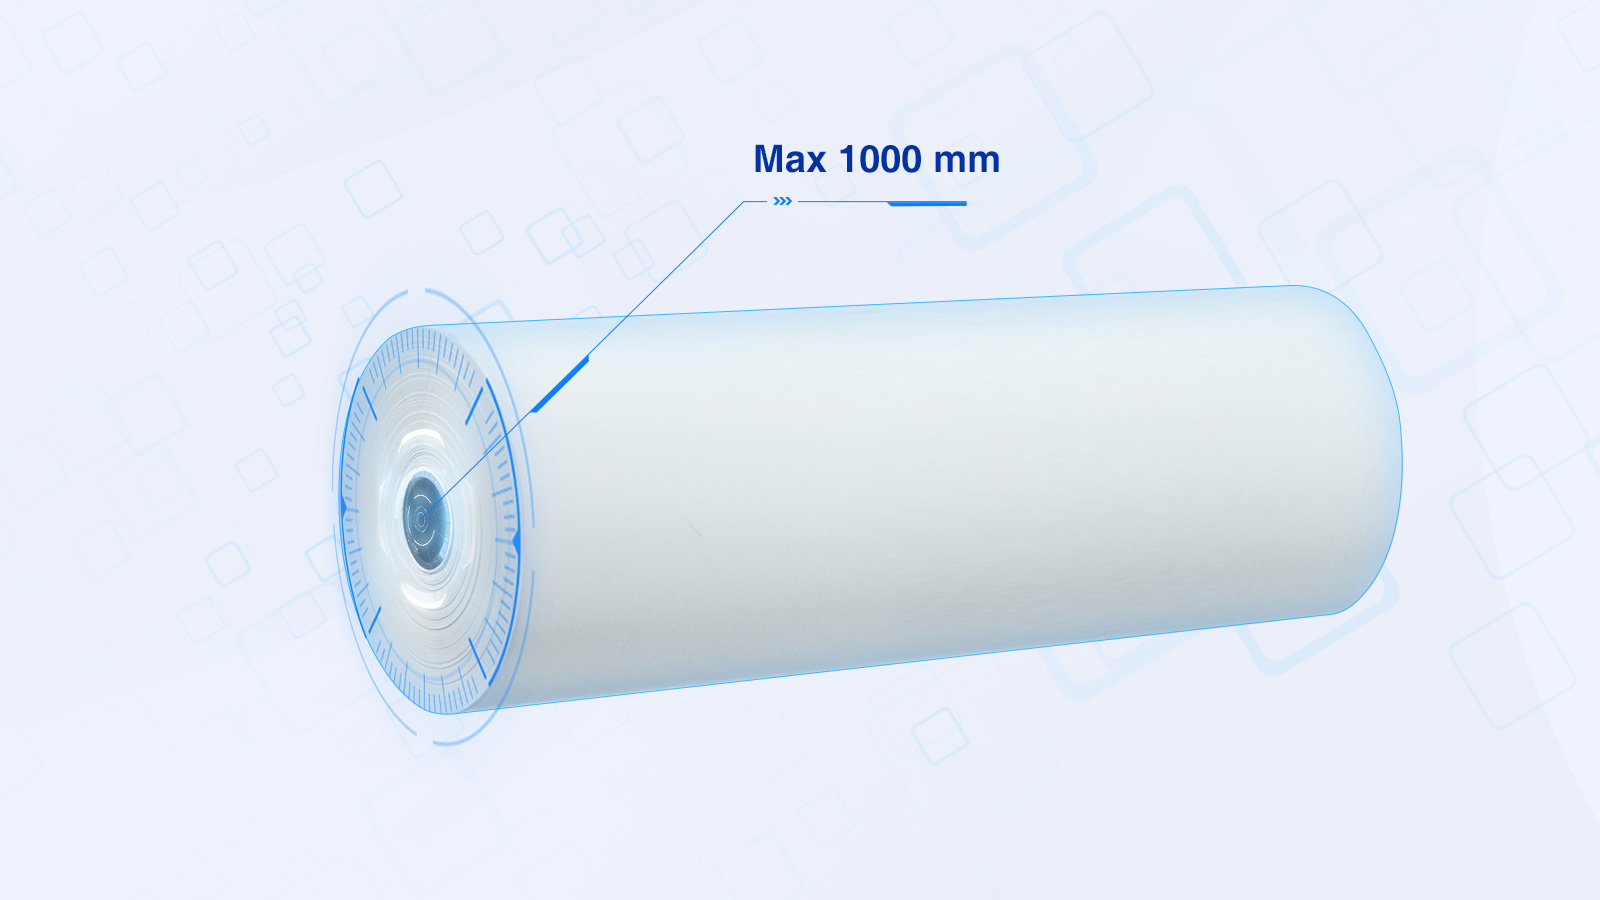 Hydraulic Fabric Beam Transport Truck Maximum Cloth Roll Diameter at 1000 mm